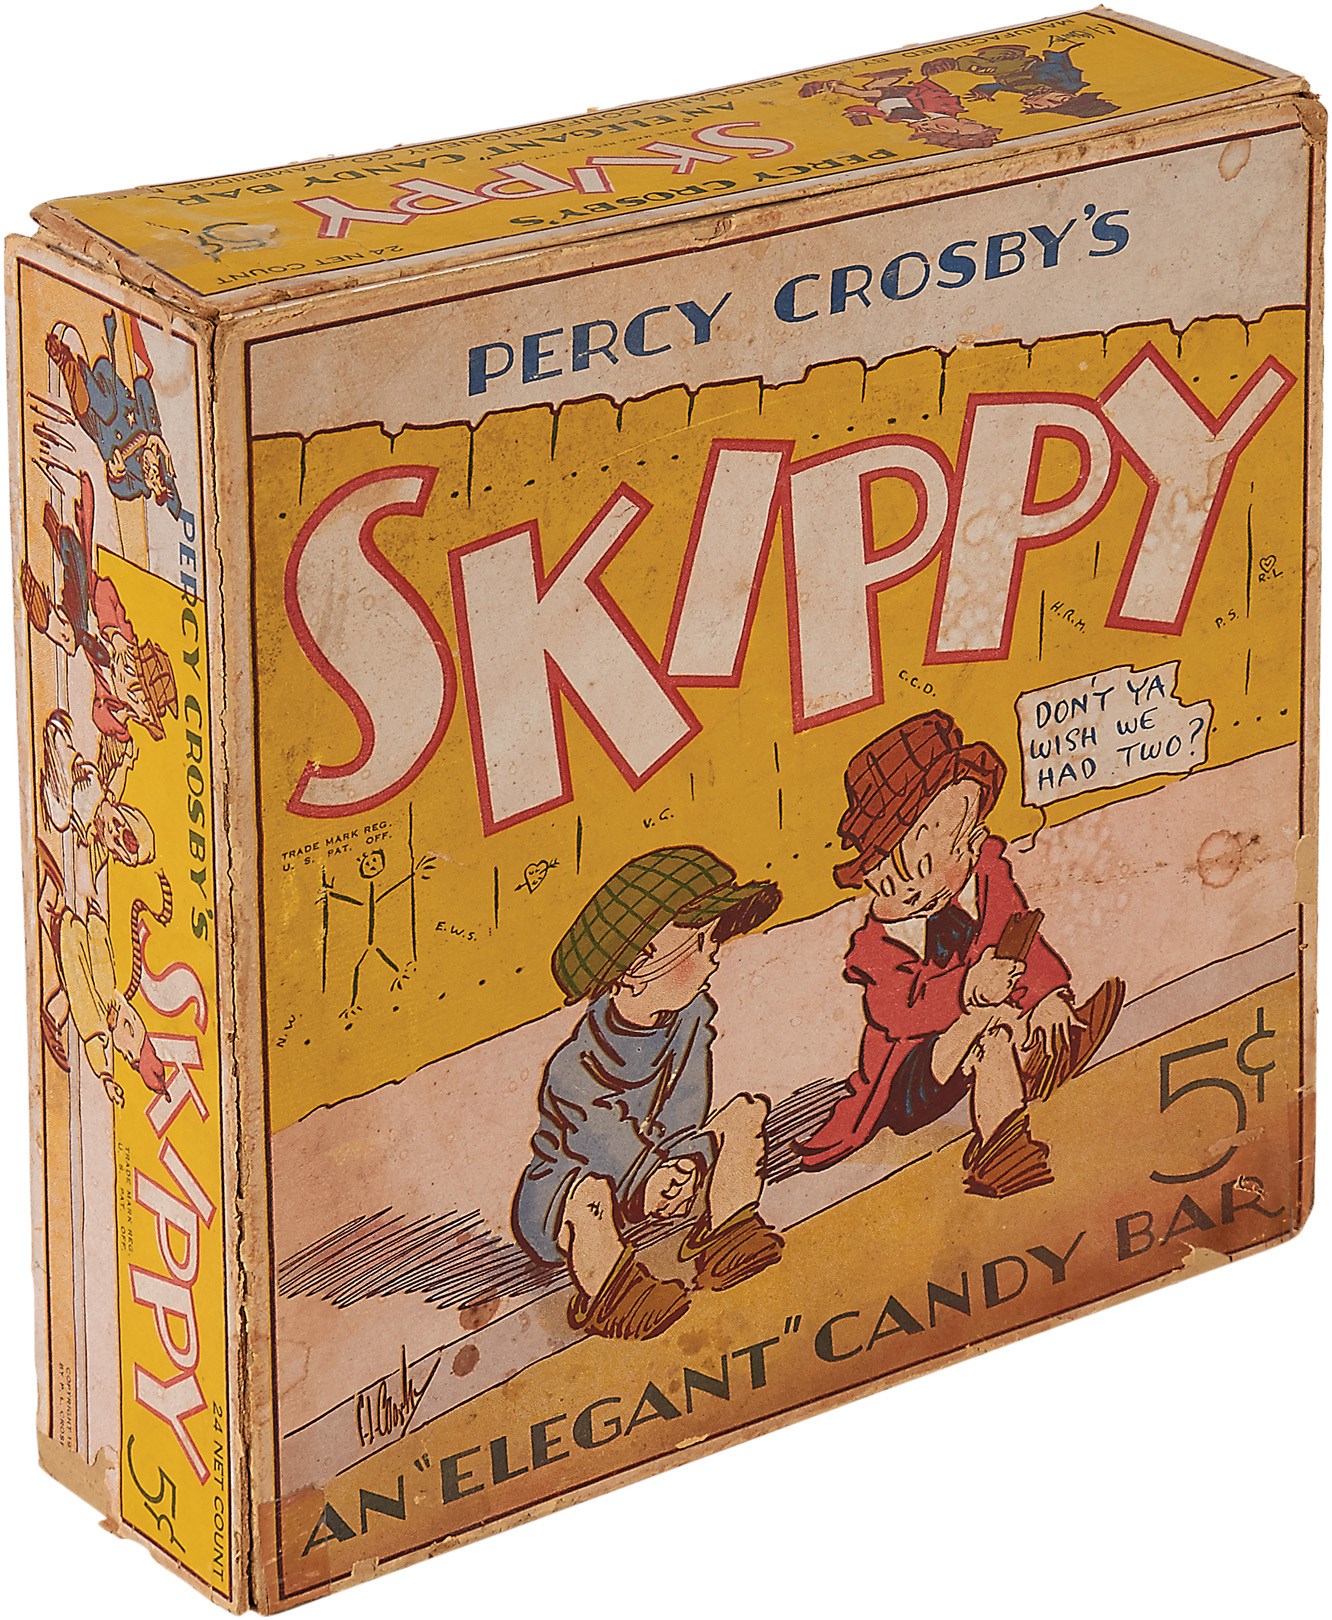 Baseball and Trading Cards - 1931 Percy Crosby Skippy "Elegant Candy" Bar Display Box